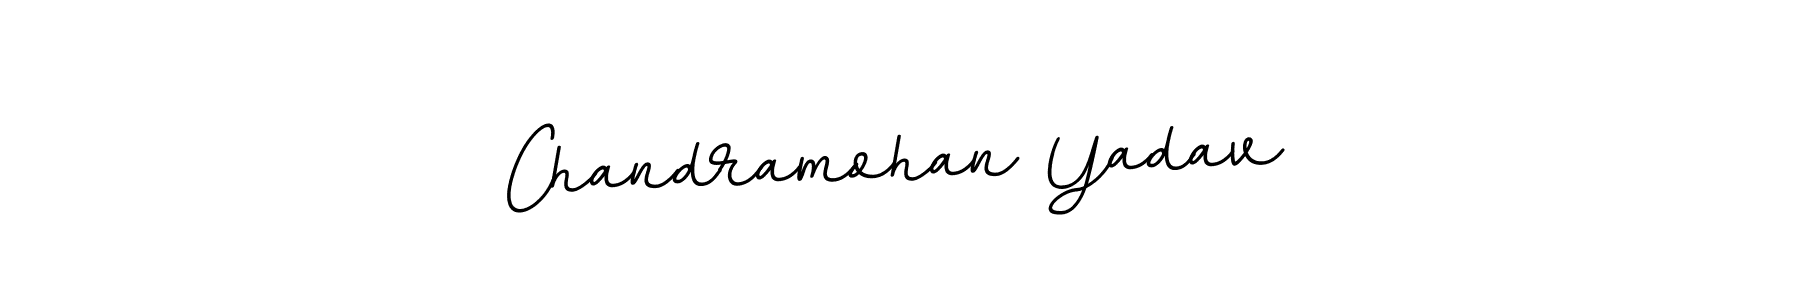 How to Draw Chandramohan Yadav signature style? BallpointsItalic-DORy9 is a latest design signature styles for name Chandramohan Yadav. Chandramohan Yadav signature style 11 images and pictures png